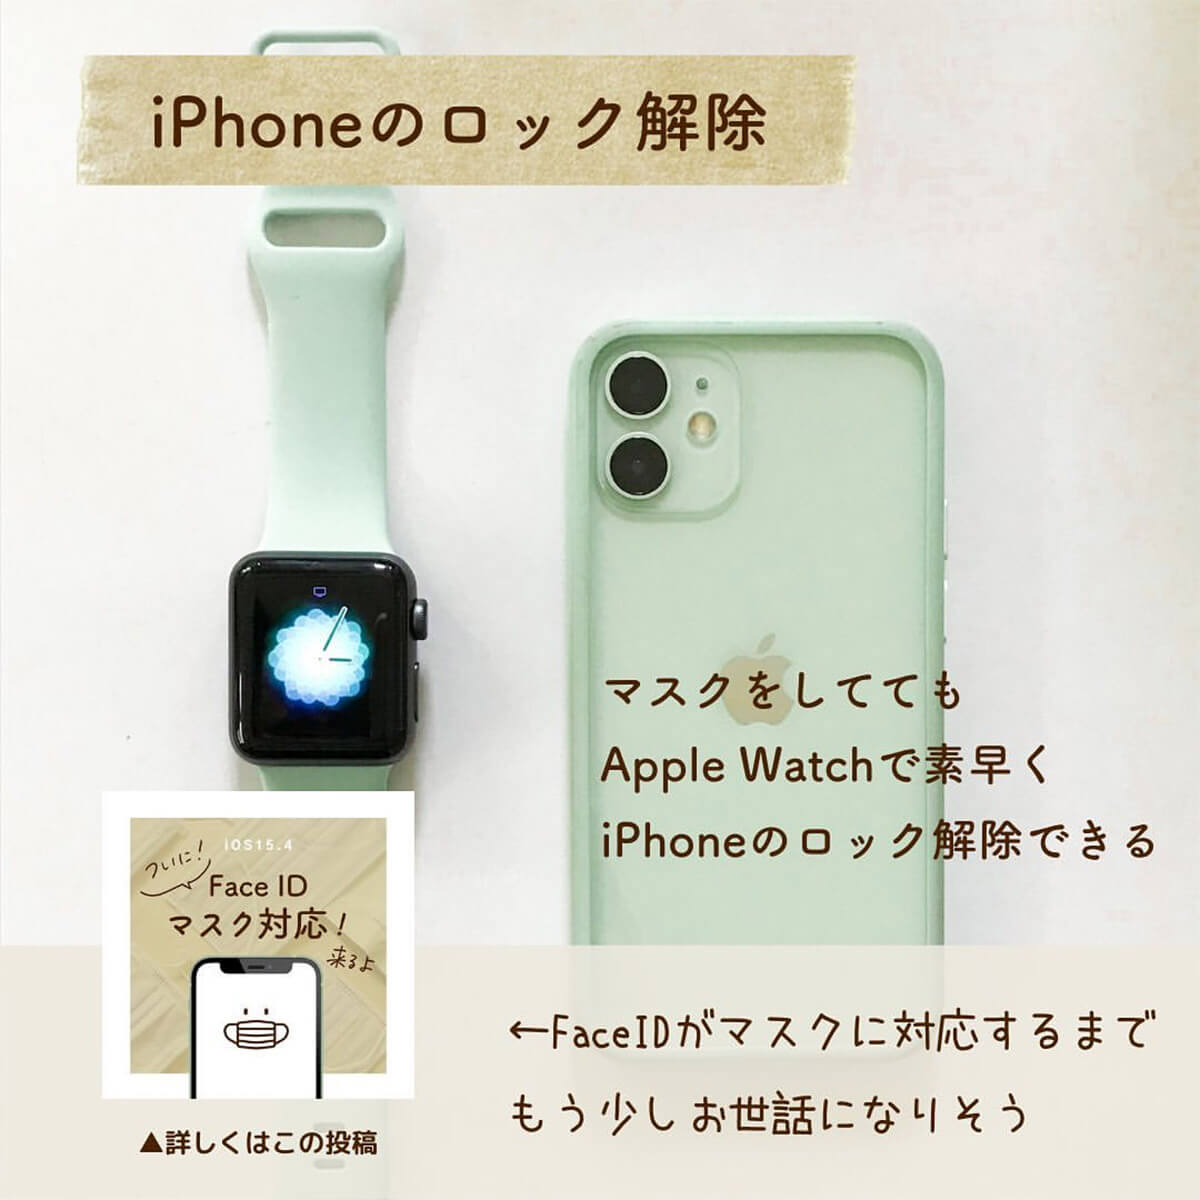 Apple Watch×iPhone連携ワザ4